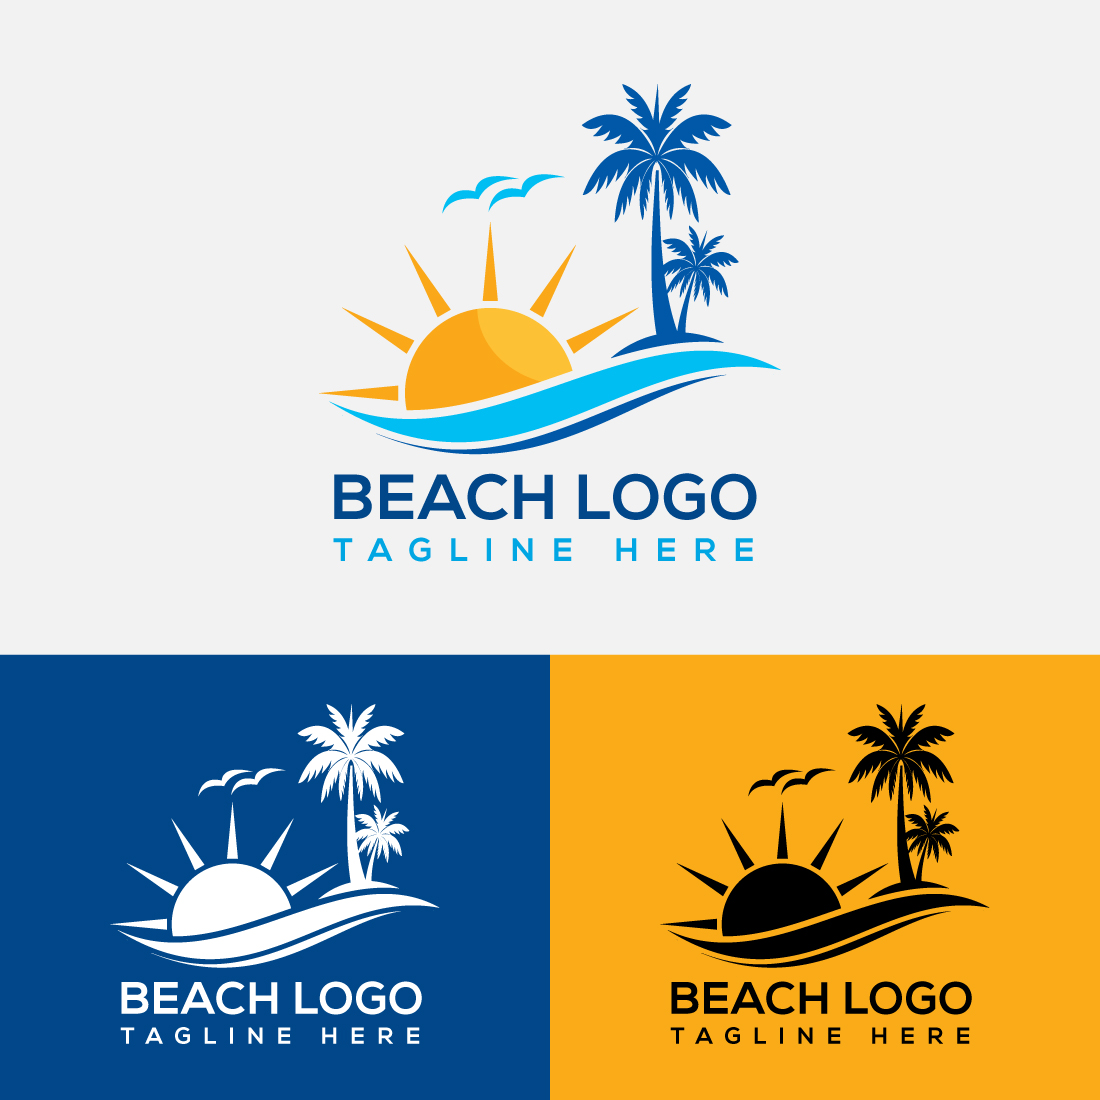 Tropical Beach Simple Logo cover image.